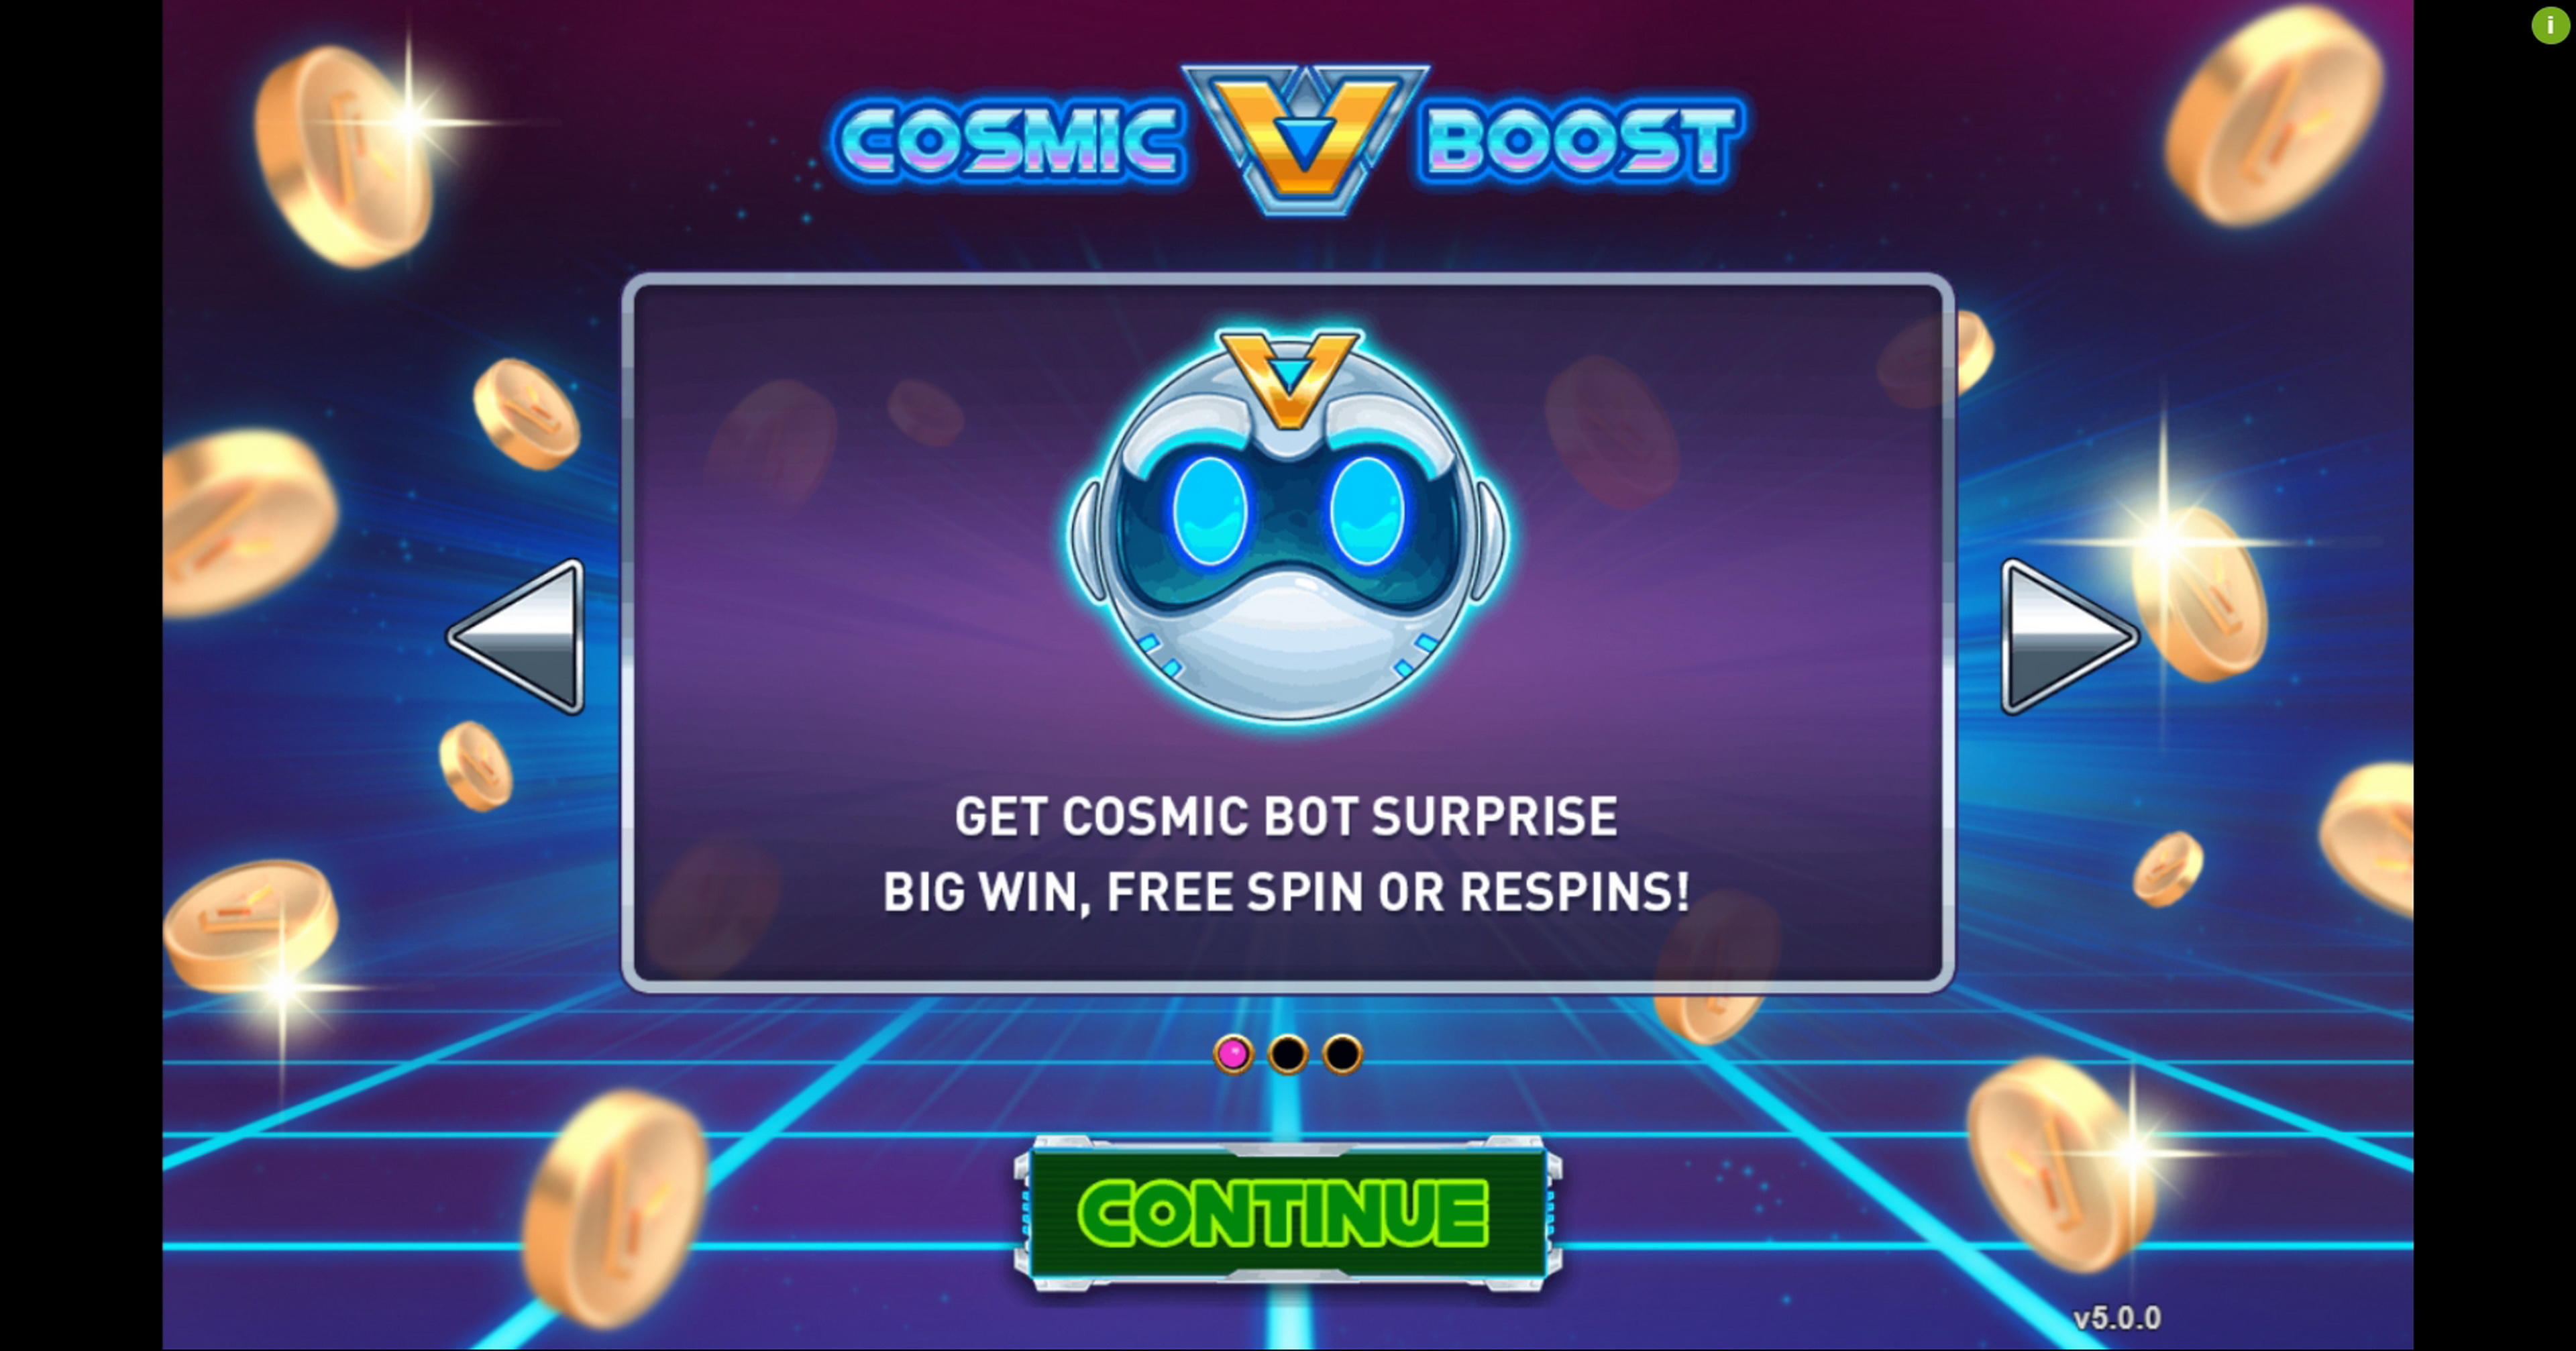 Cosmic Cash Bonus Buys Rollercoaster!